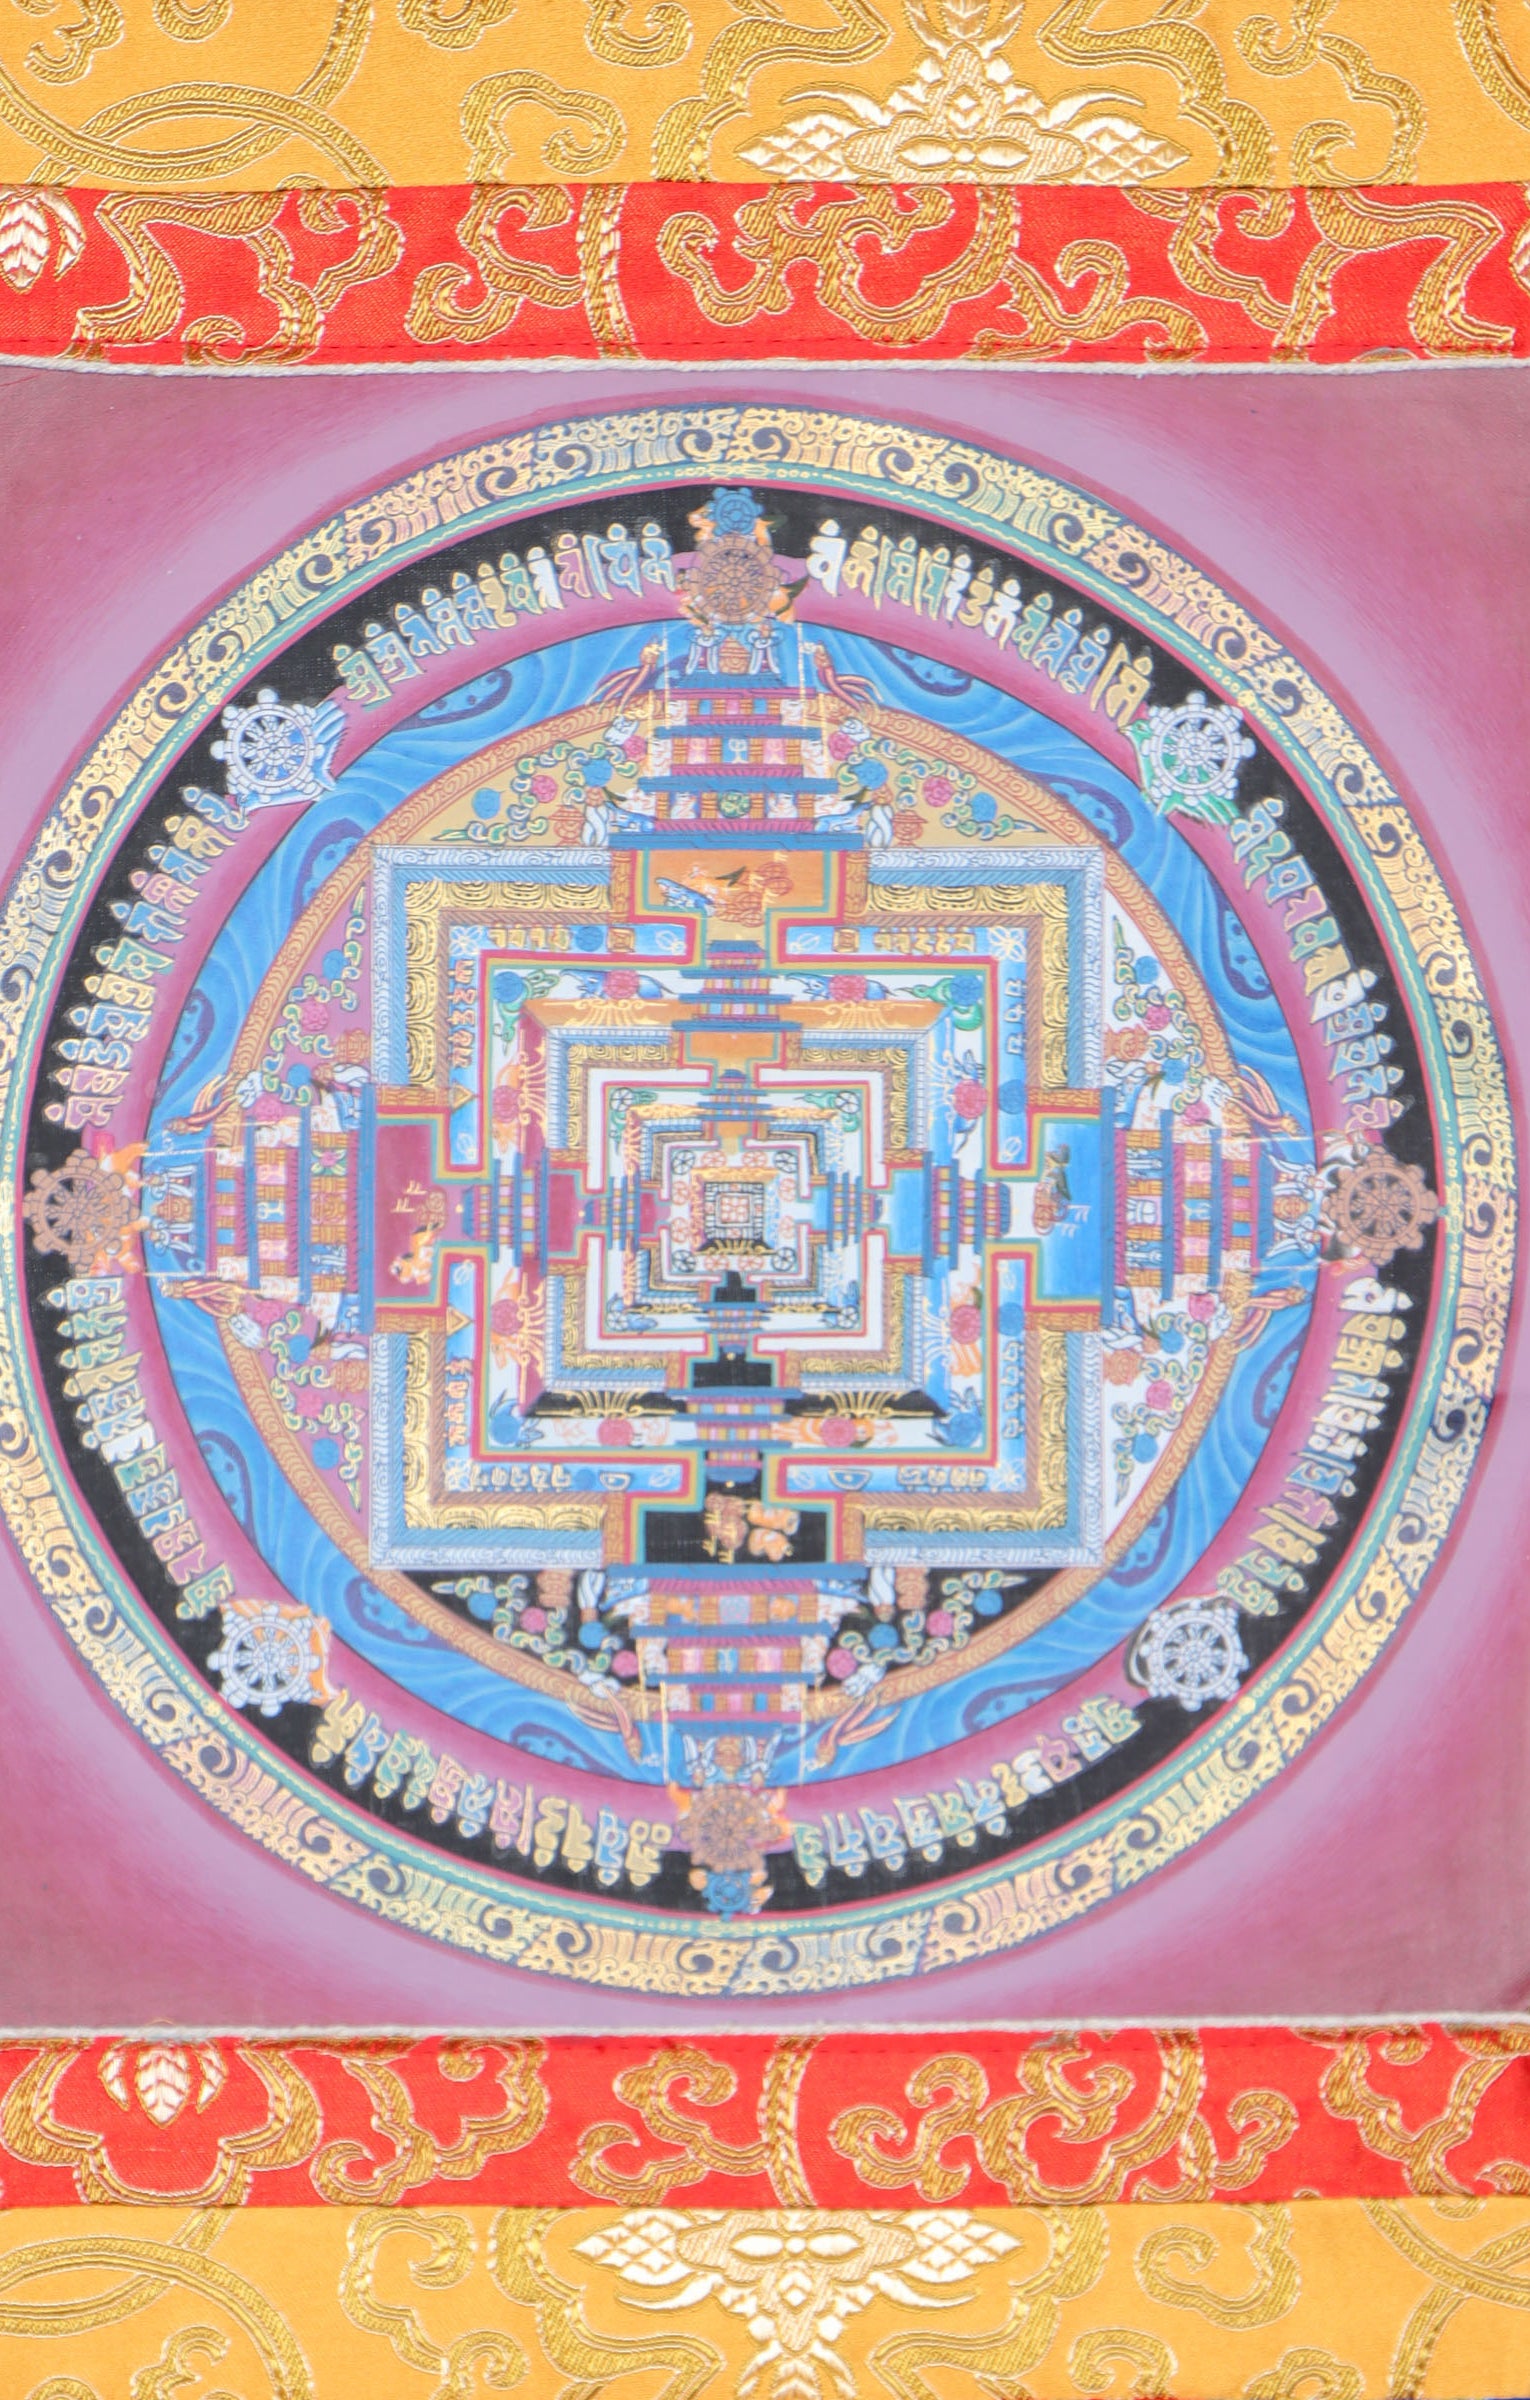 Kalachakra Mandala Brocade Thangka for buddhist rituals.